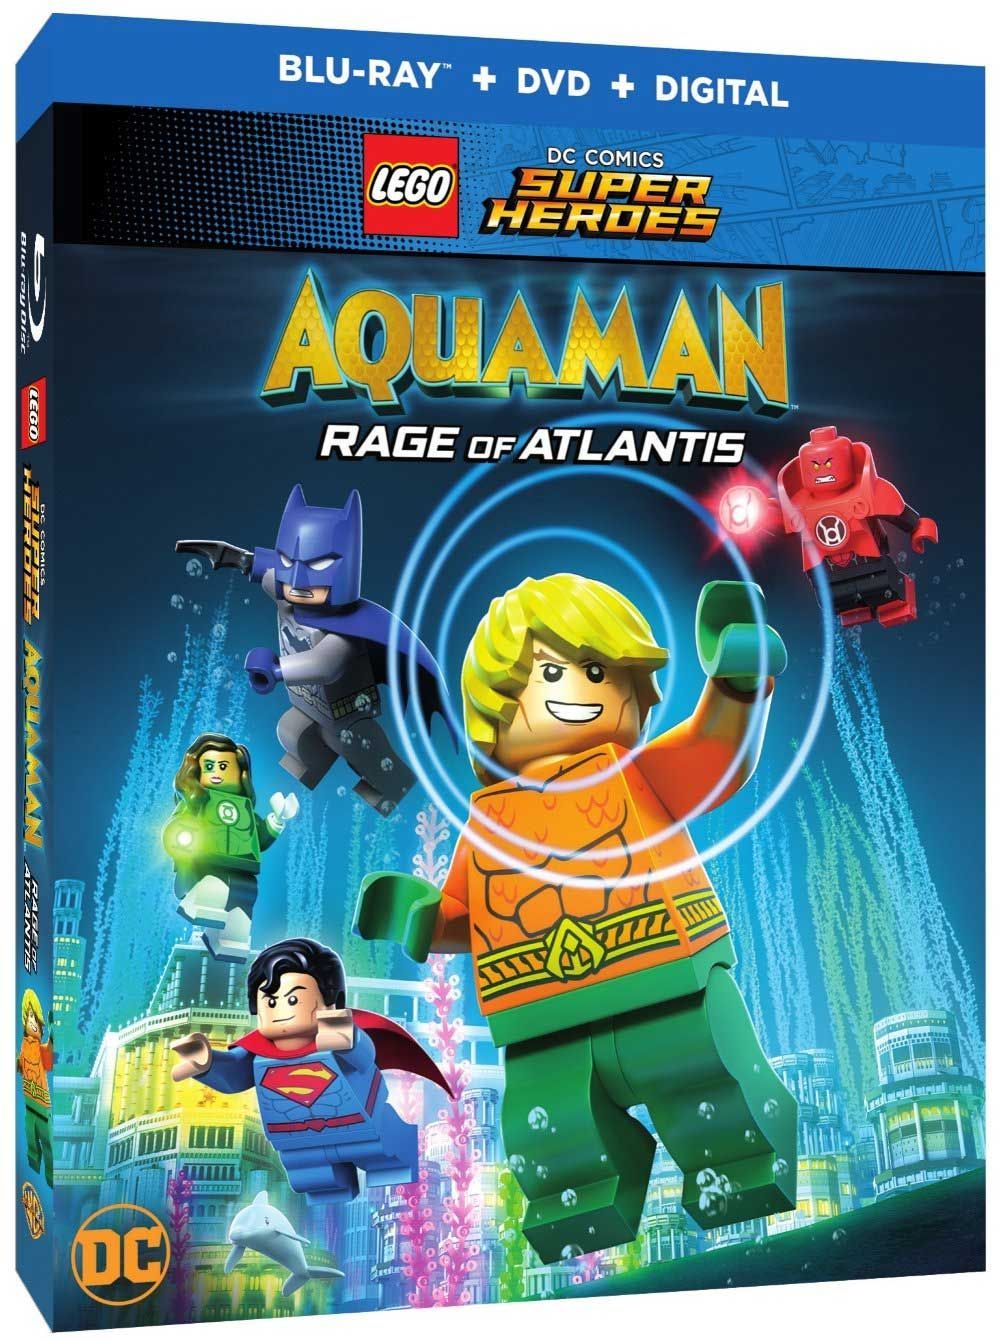 Aquaman obtient son propre film d'animation LEGO, Rage of Atlantis